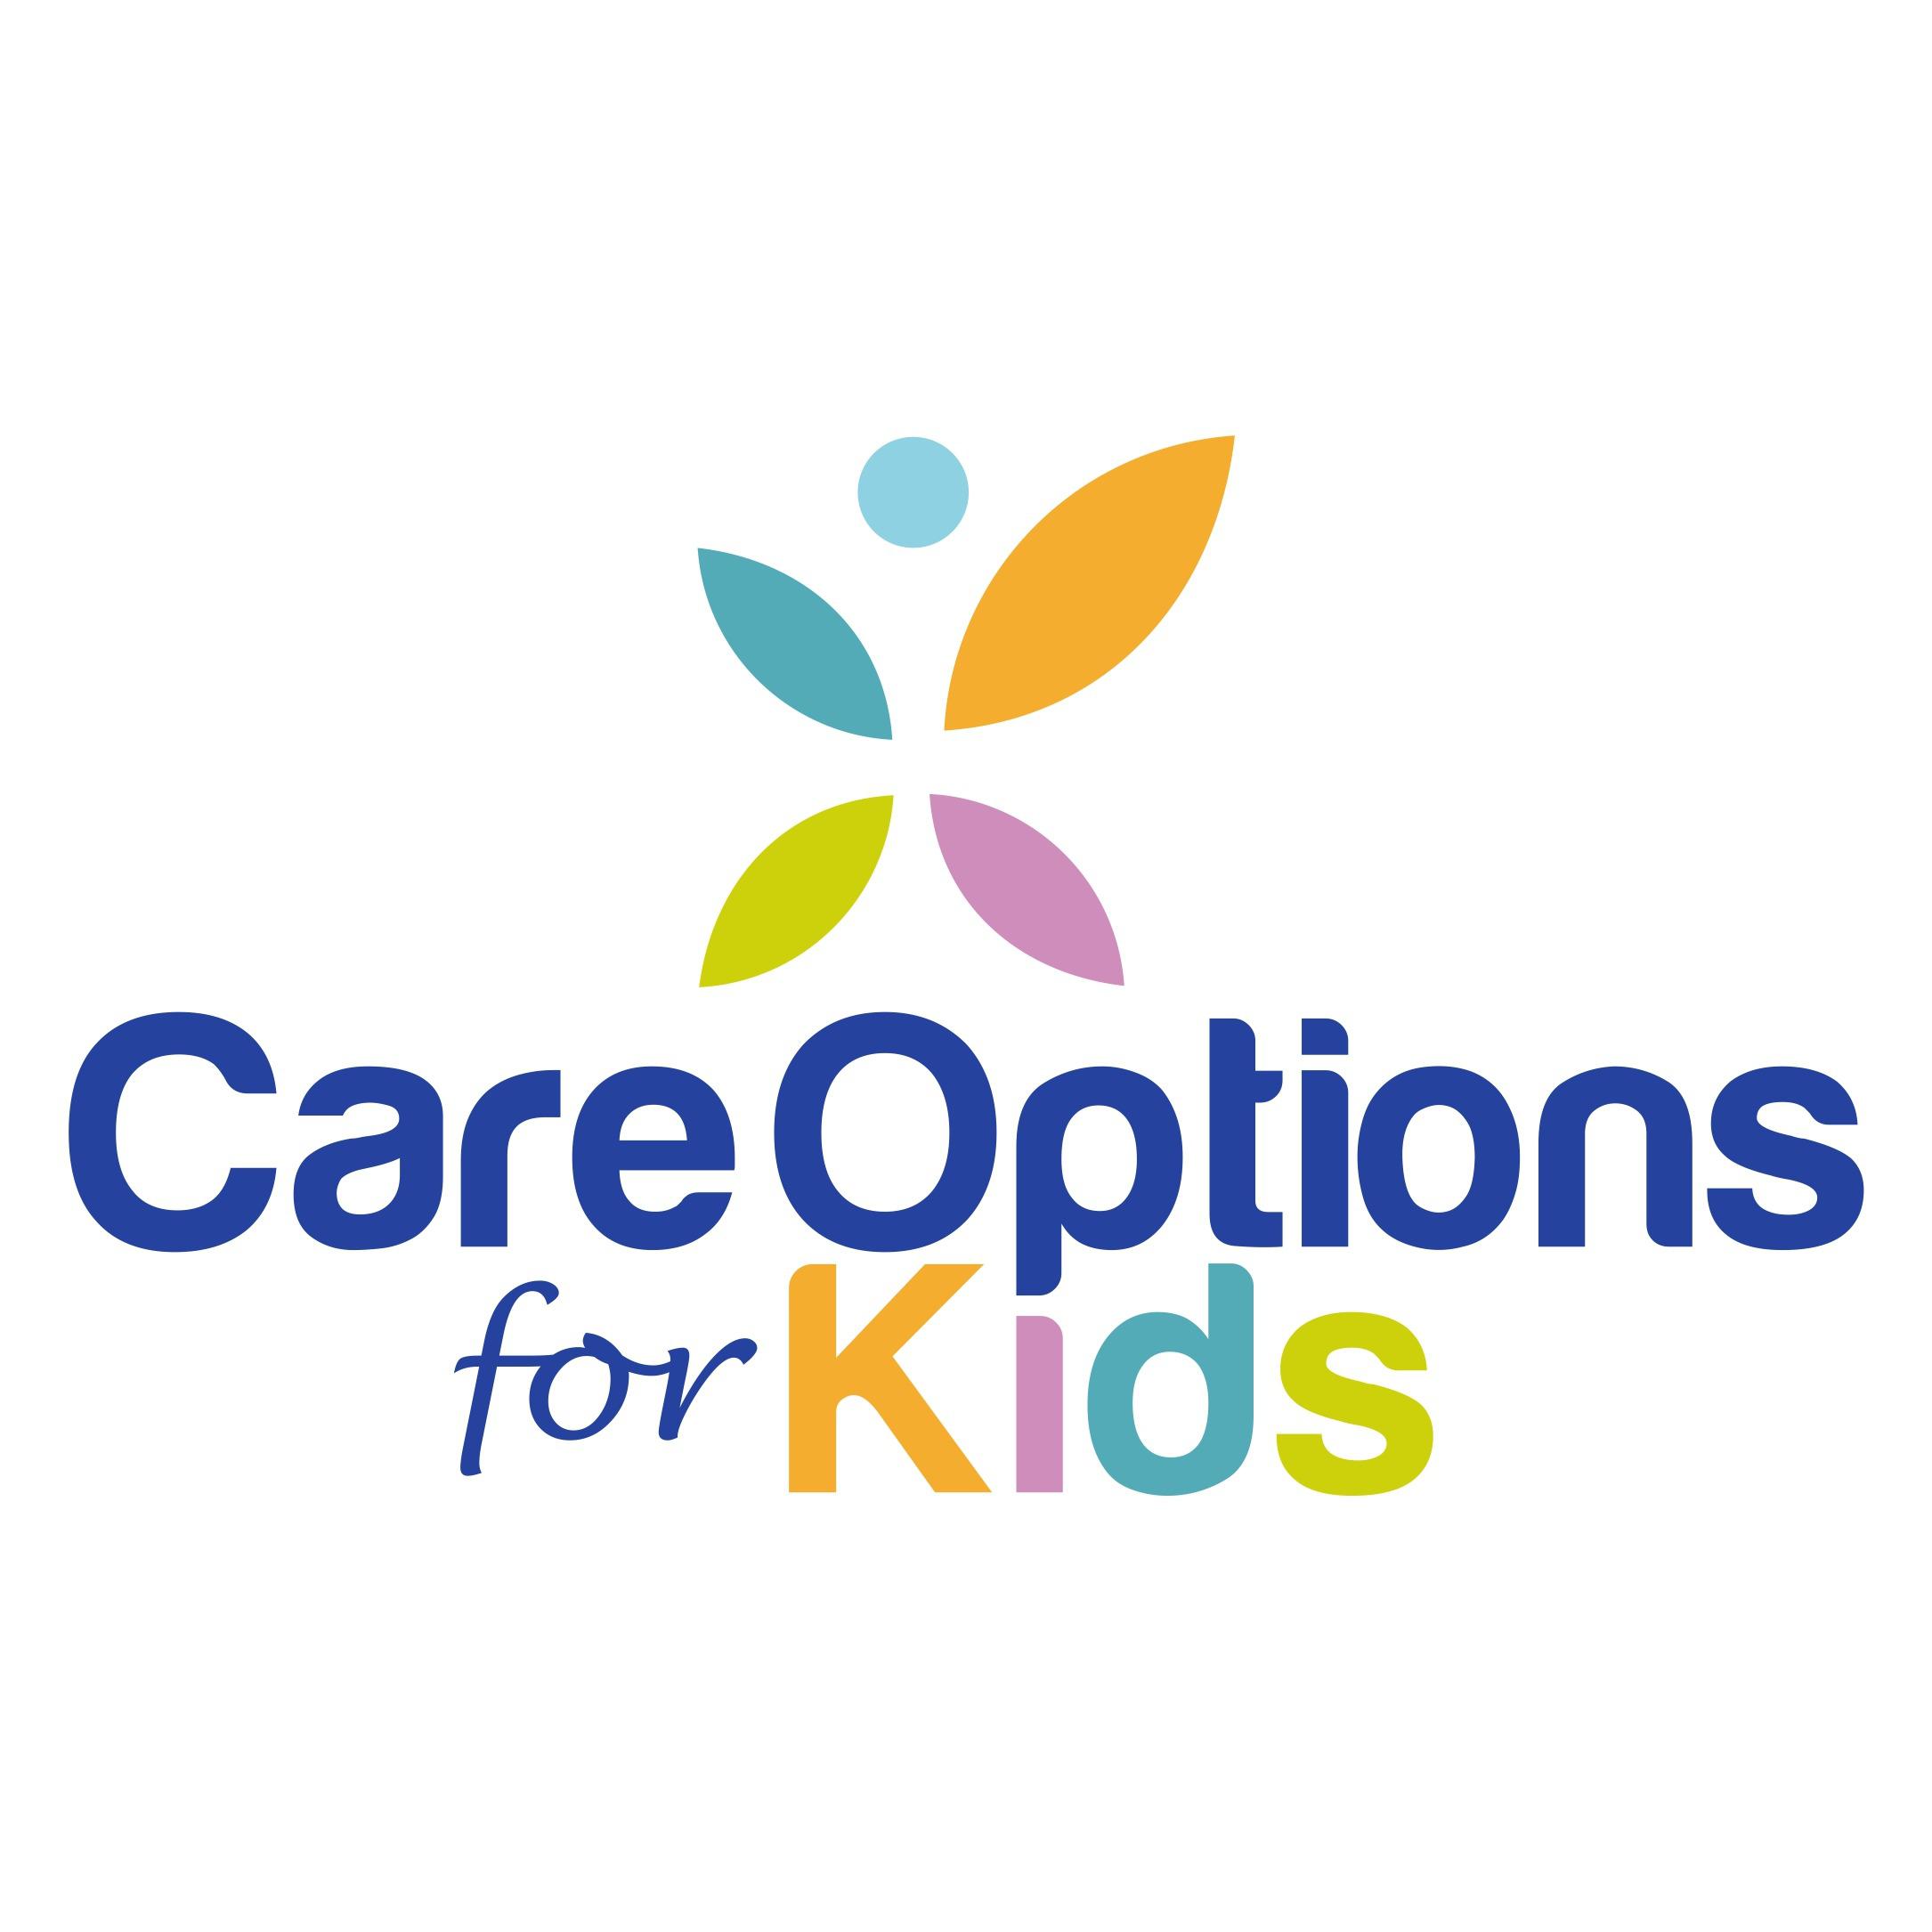 Care Options for Kids - Tampa, FL 33619 - (813)534-5899 | ShowMeLocal.com